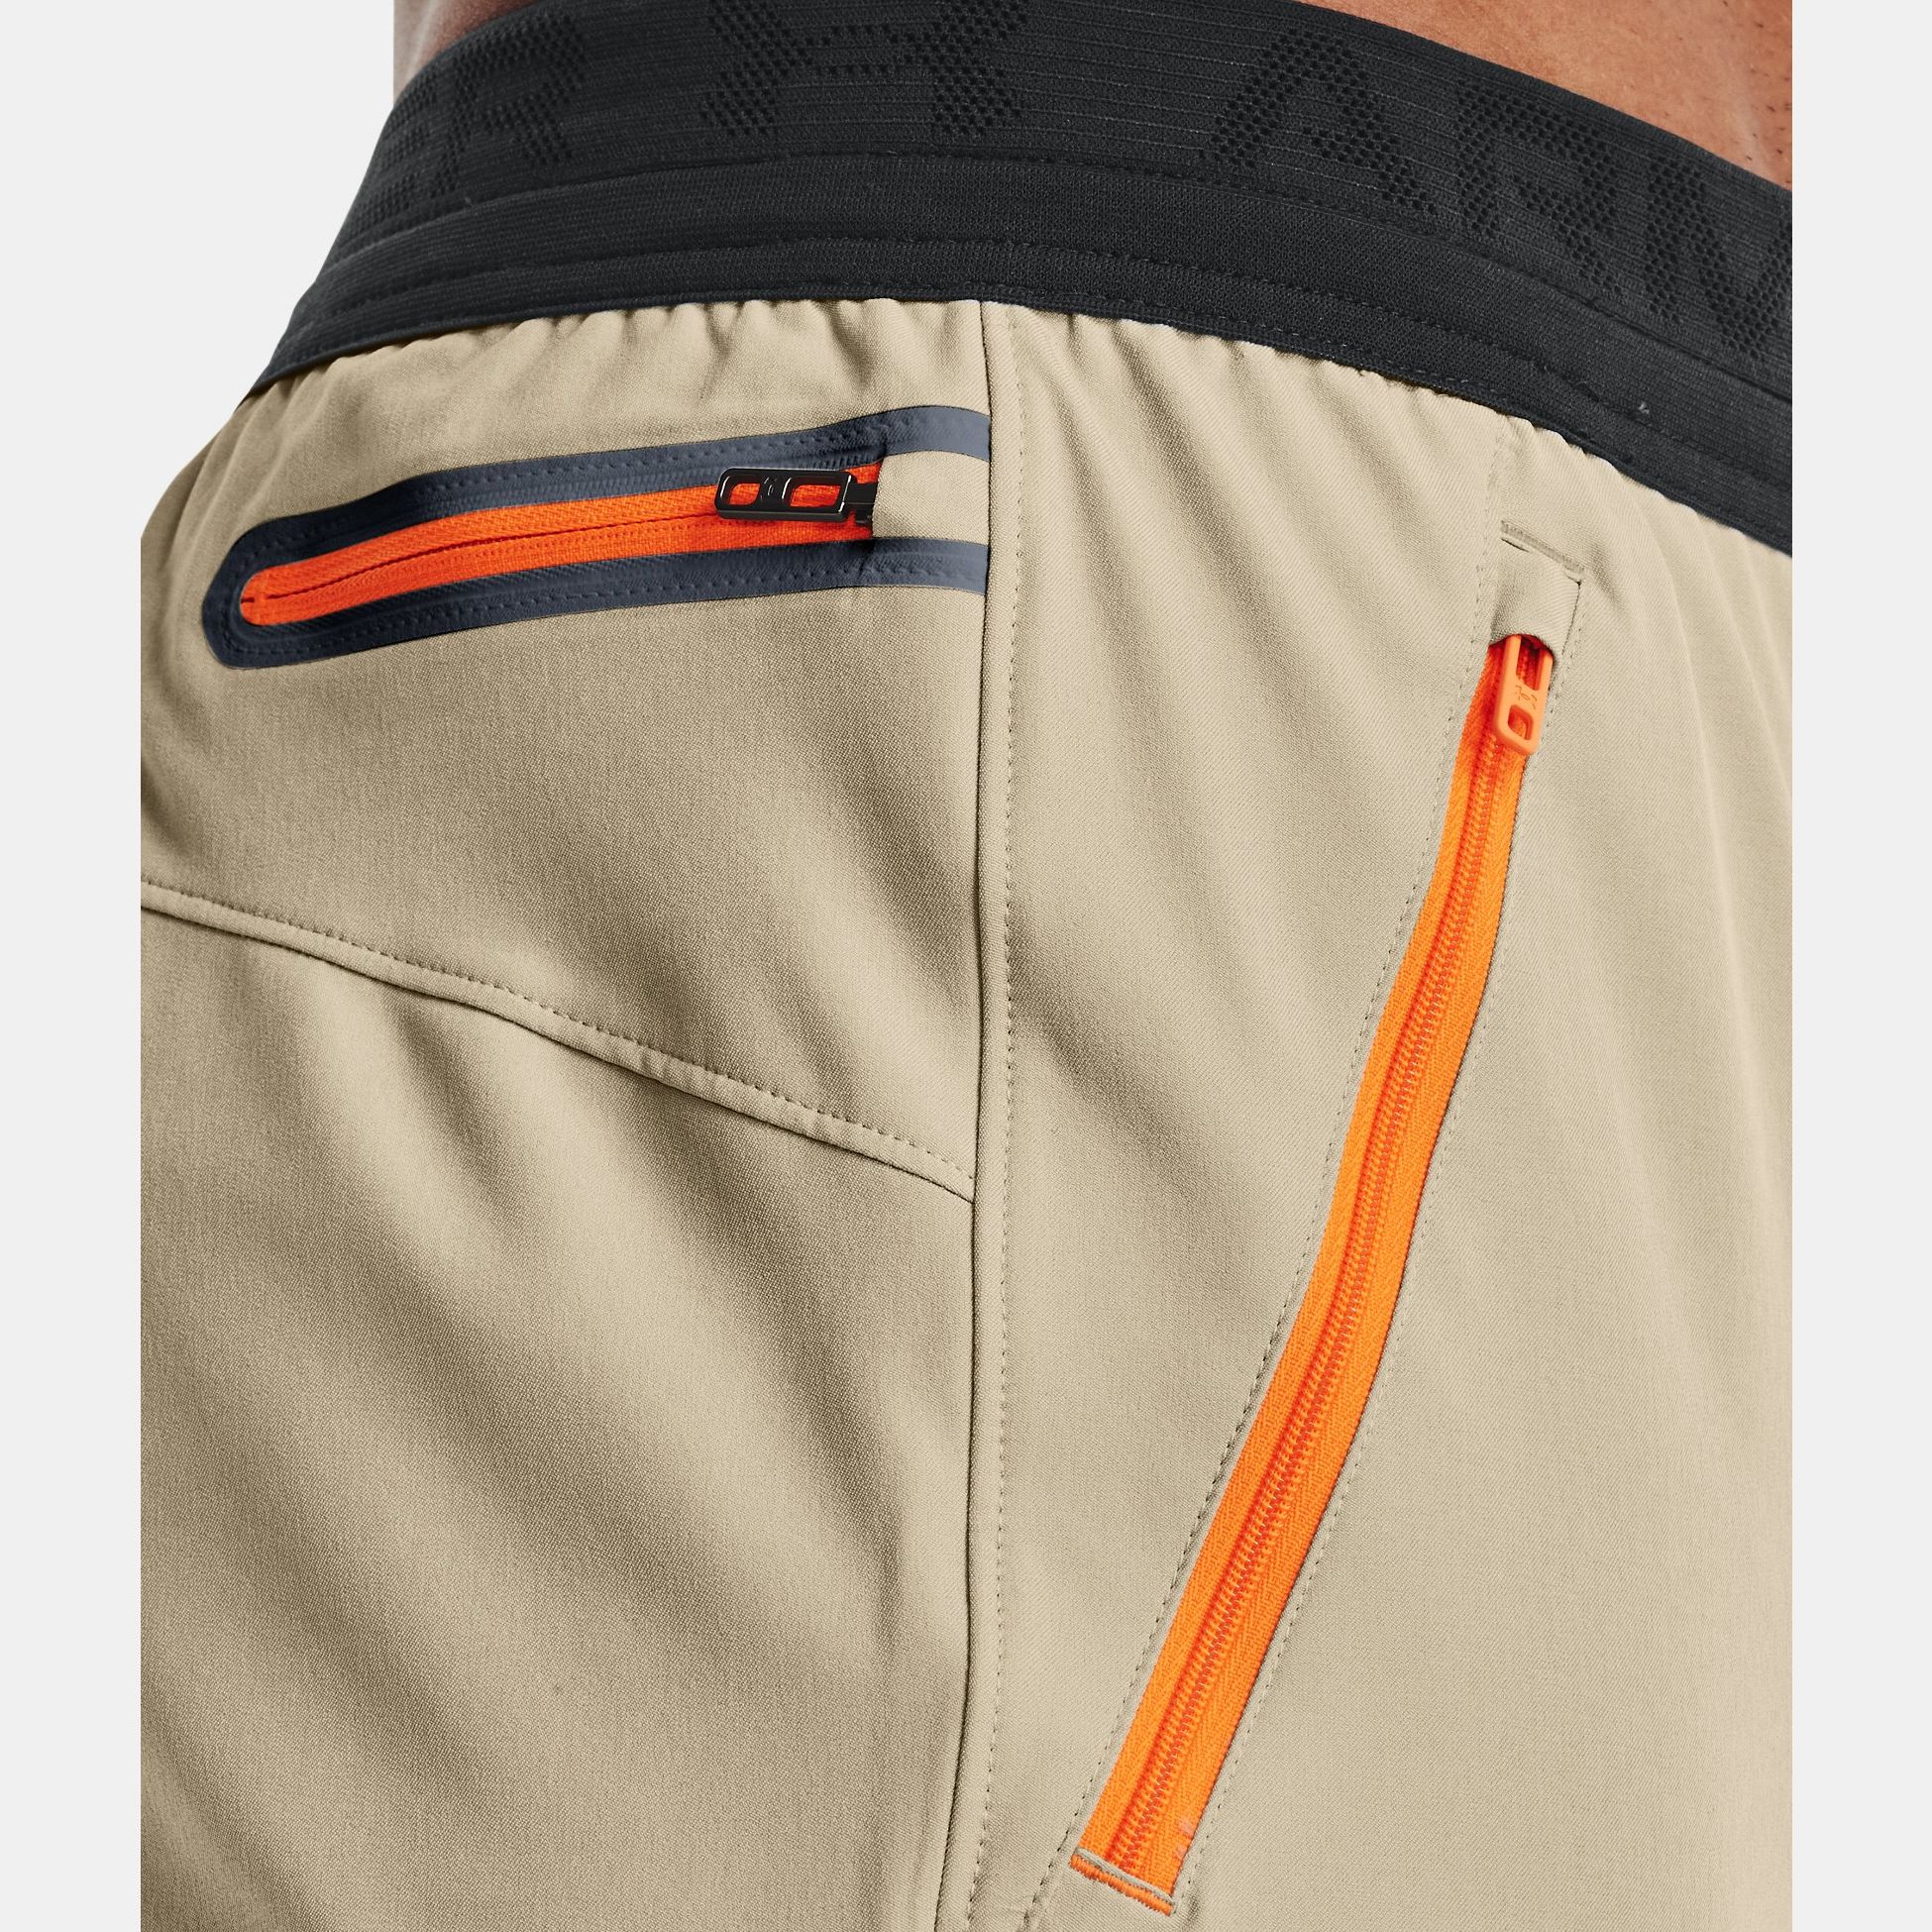 Pantaloni Lungi -  under armour UA Terrain Unstoppable Crop Pants